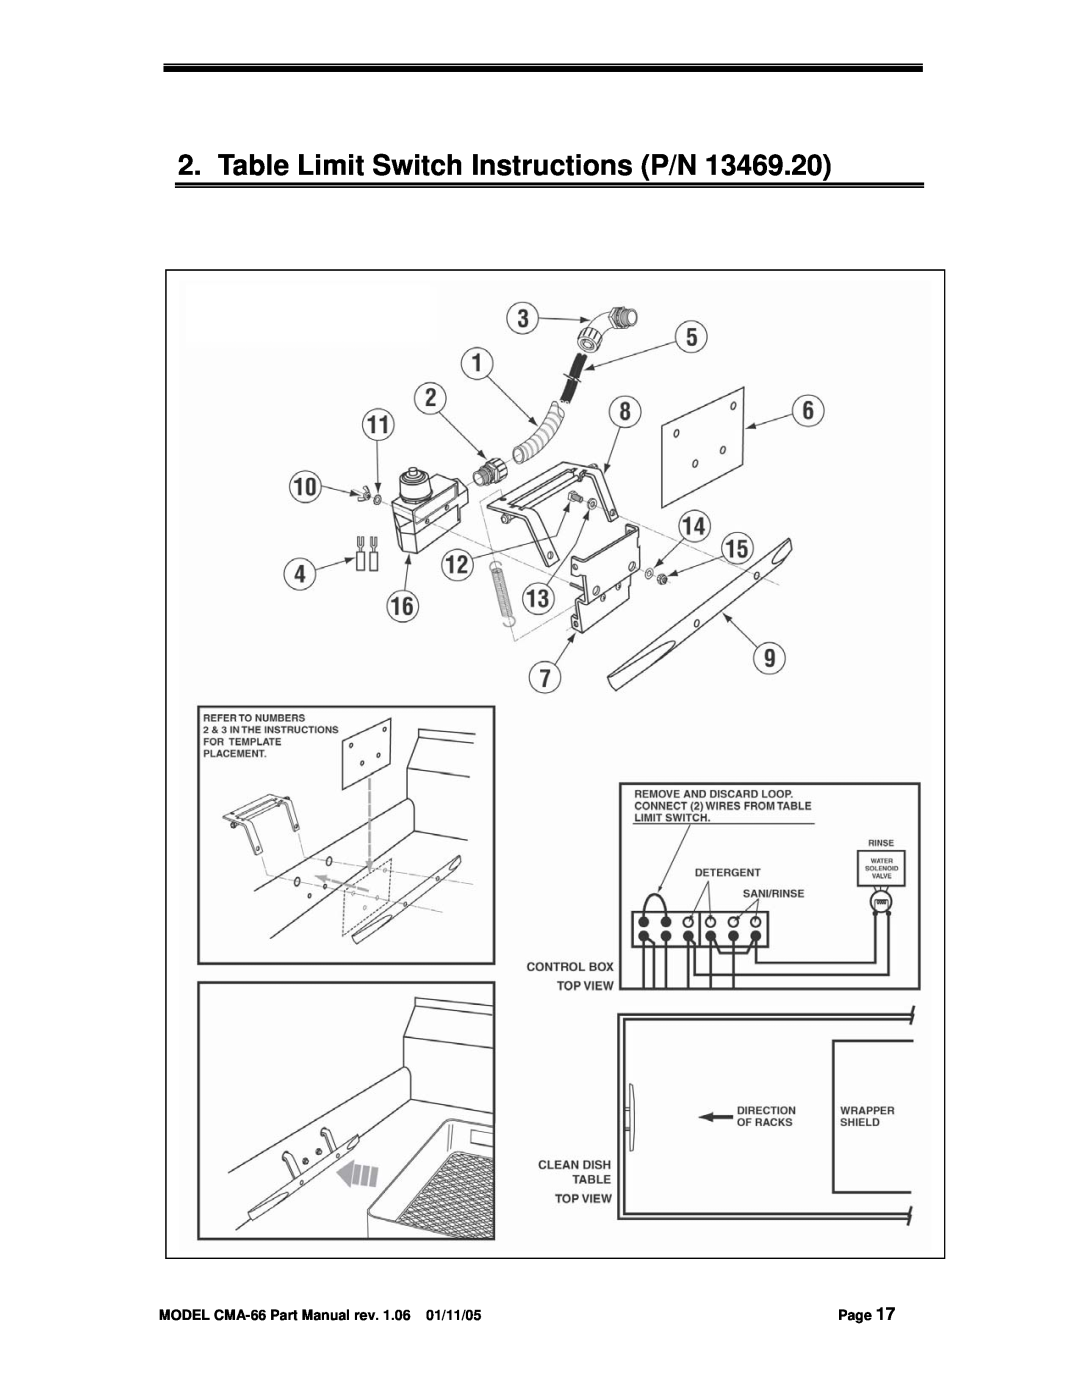 Black Box CMA DISHMACHINE manual Table Limit Switch Instructions P/N, MODEL CMA-66Part Manual rev. 1.06 01/11/05, Page 